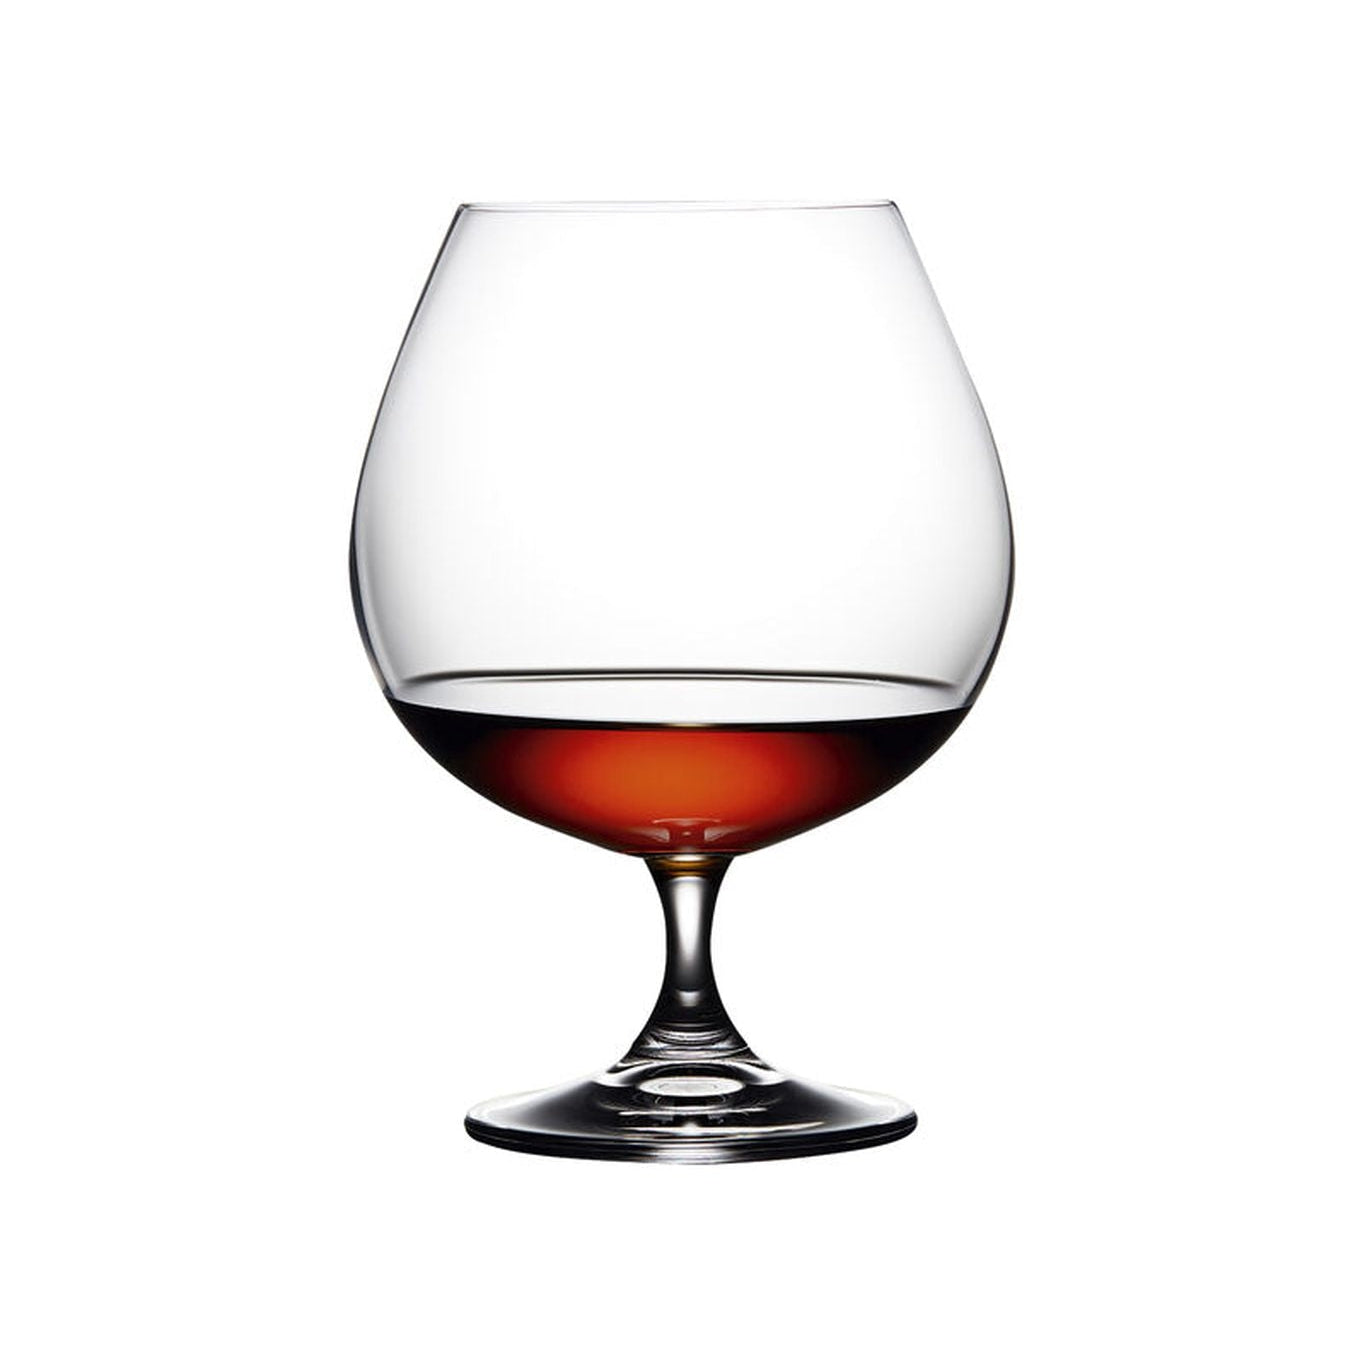 Lyngby Glas Juvel Cognac Glass 69 Cl, 4 PC.